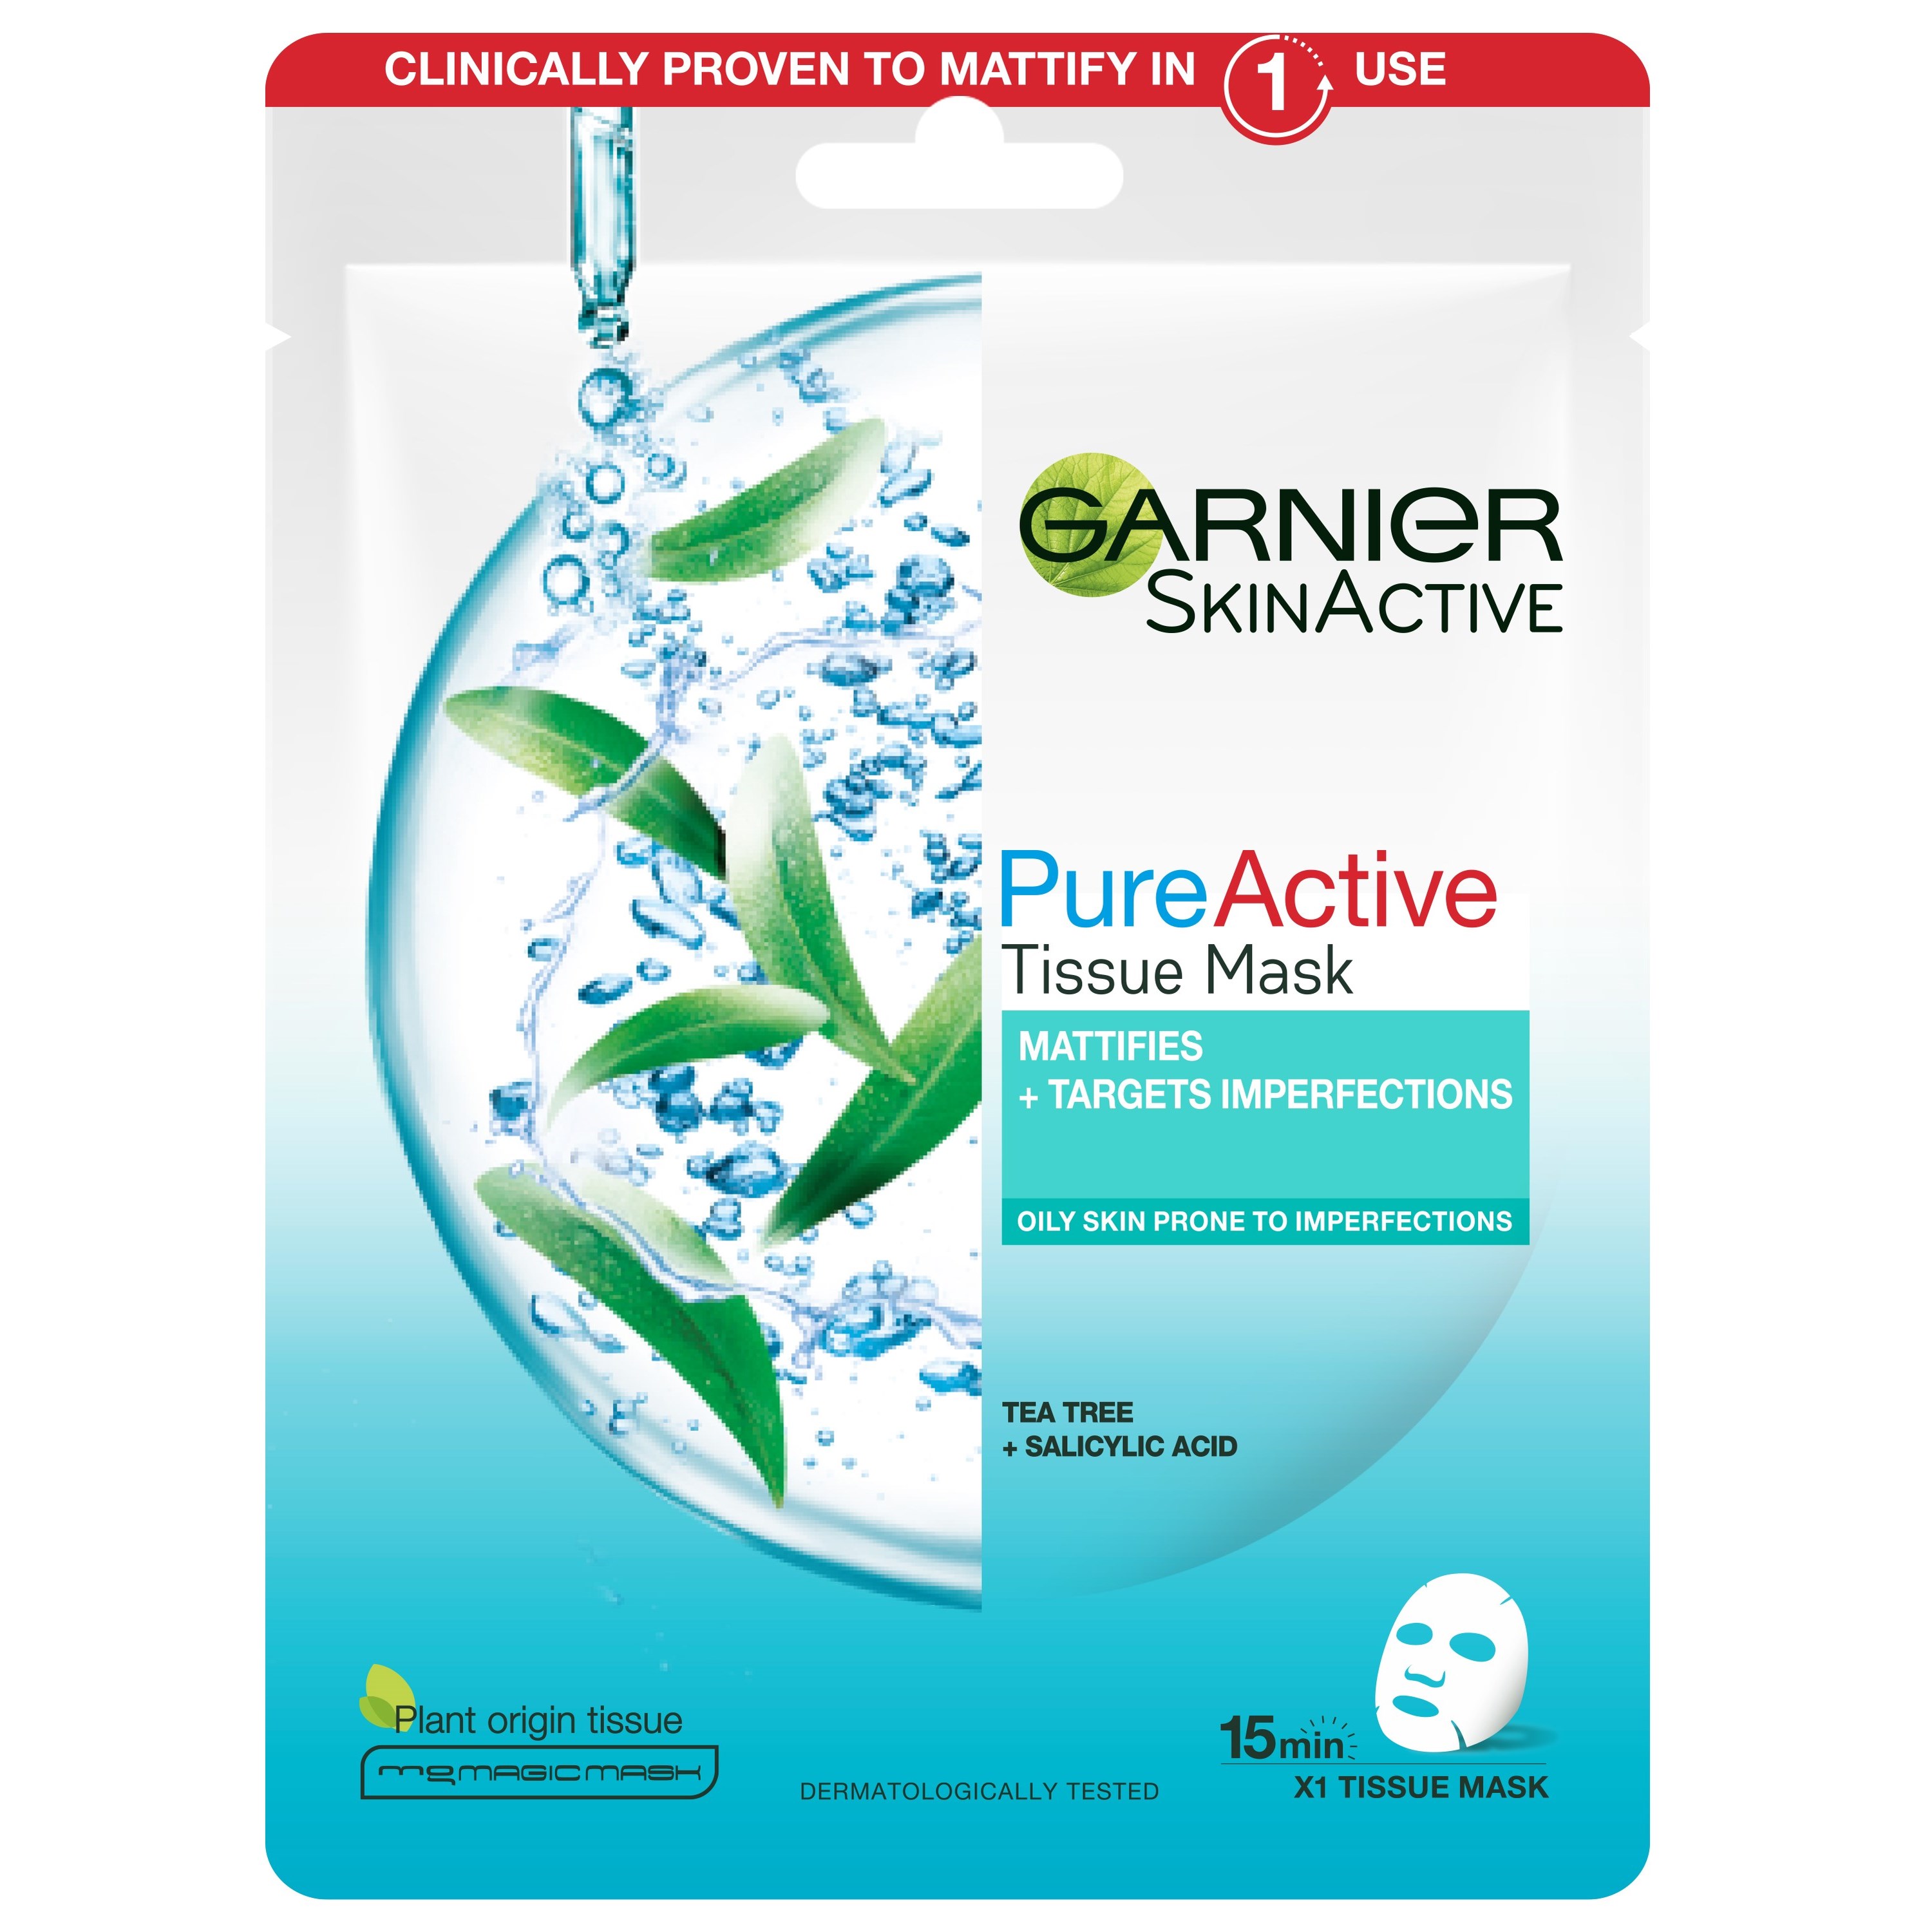 Läs mer om Garnier SkinActive PureActive Tissue Mask